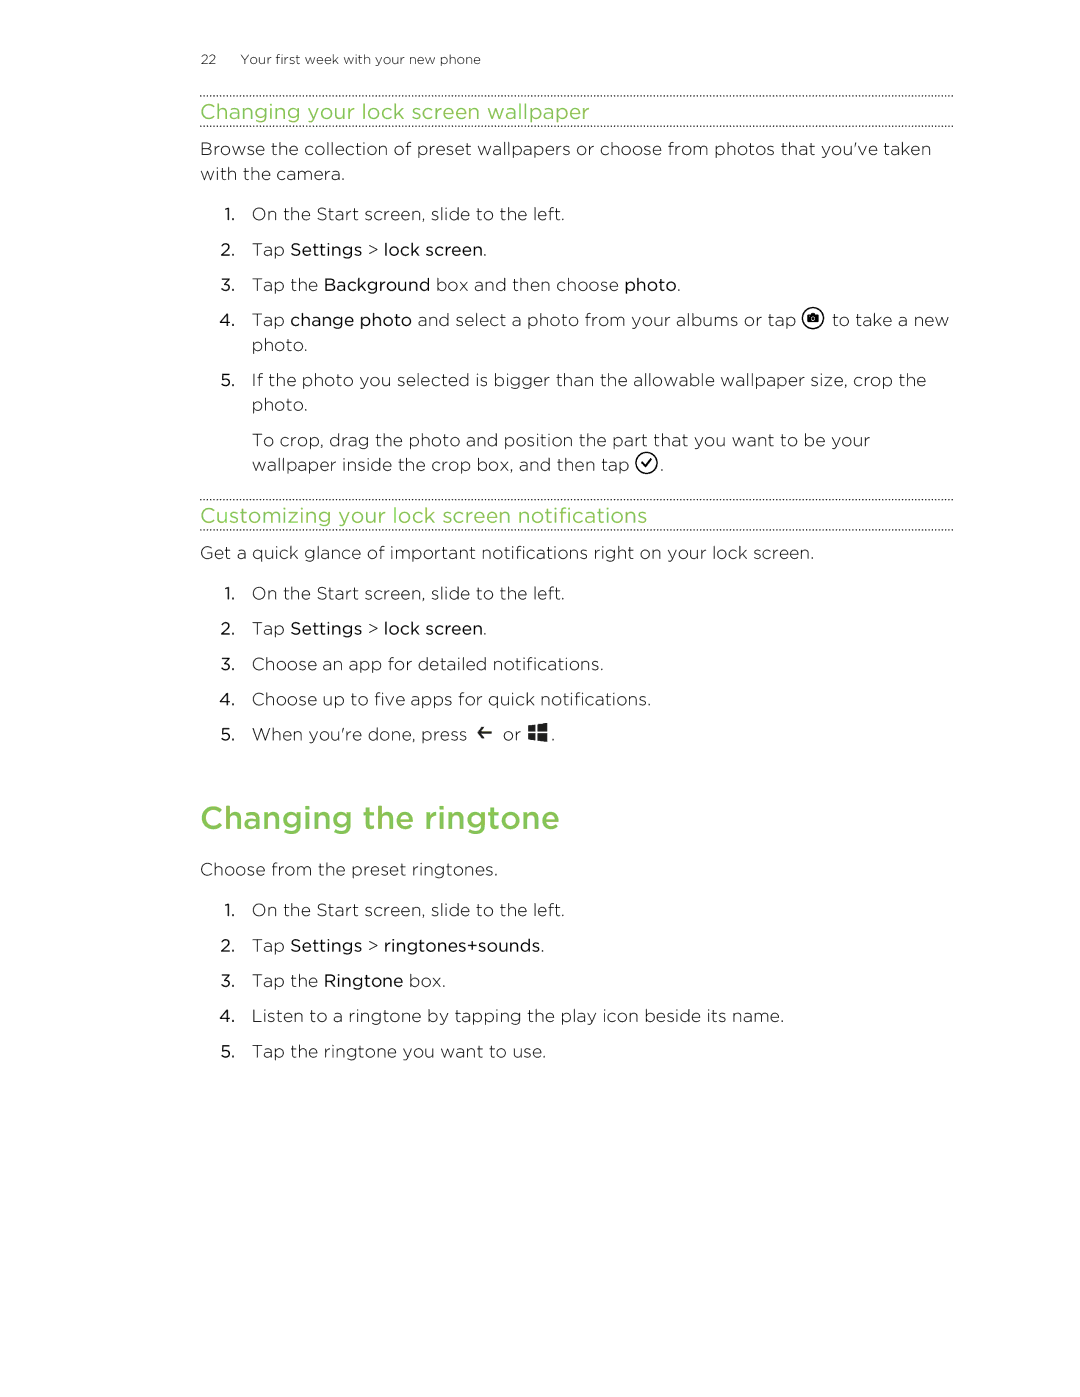 HTC 8X manual Changing the ringtone, Changing your lock screen wallpaper, Customizing your lock screen notifications 